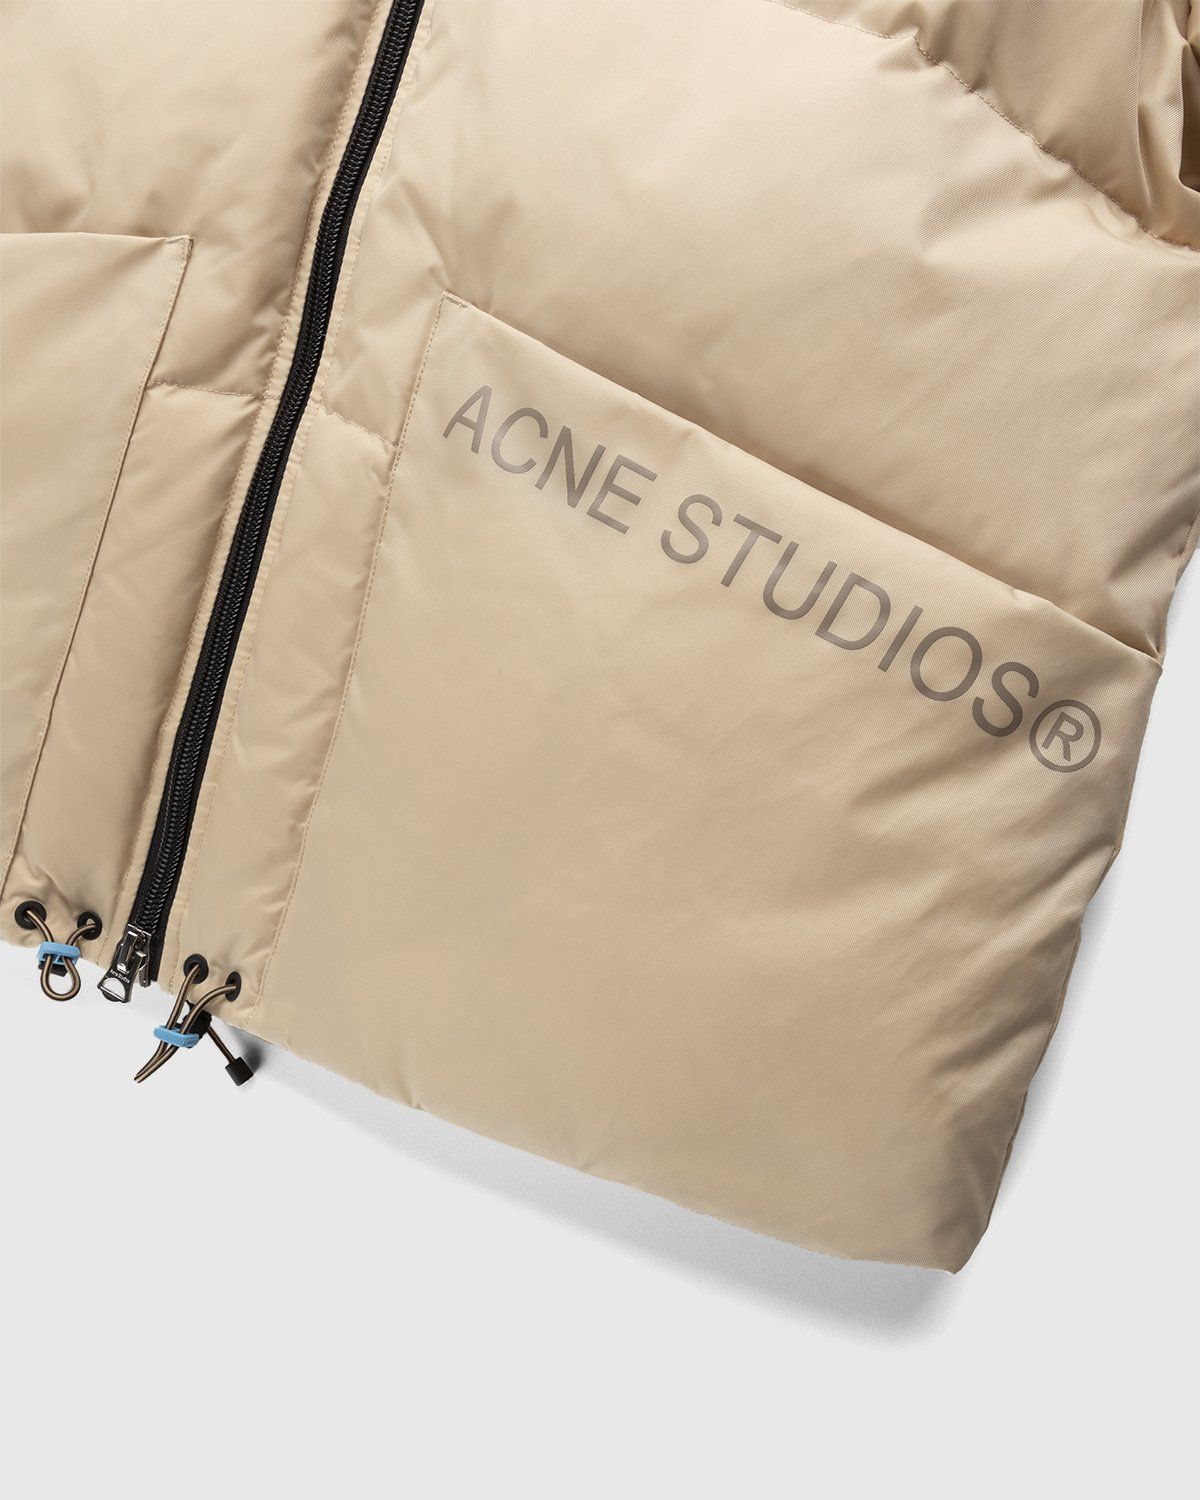 Acne Studios – Puffer Jacket Biscuit Beige - Down Jackets - Beige - Image 4